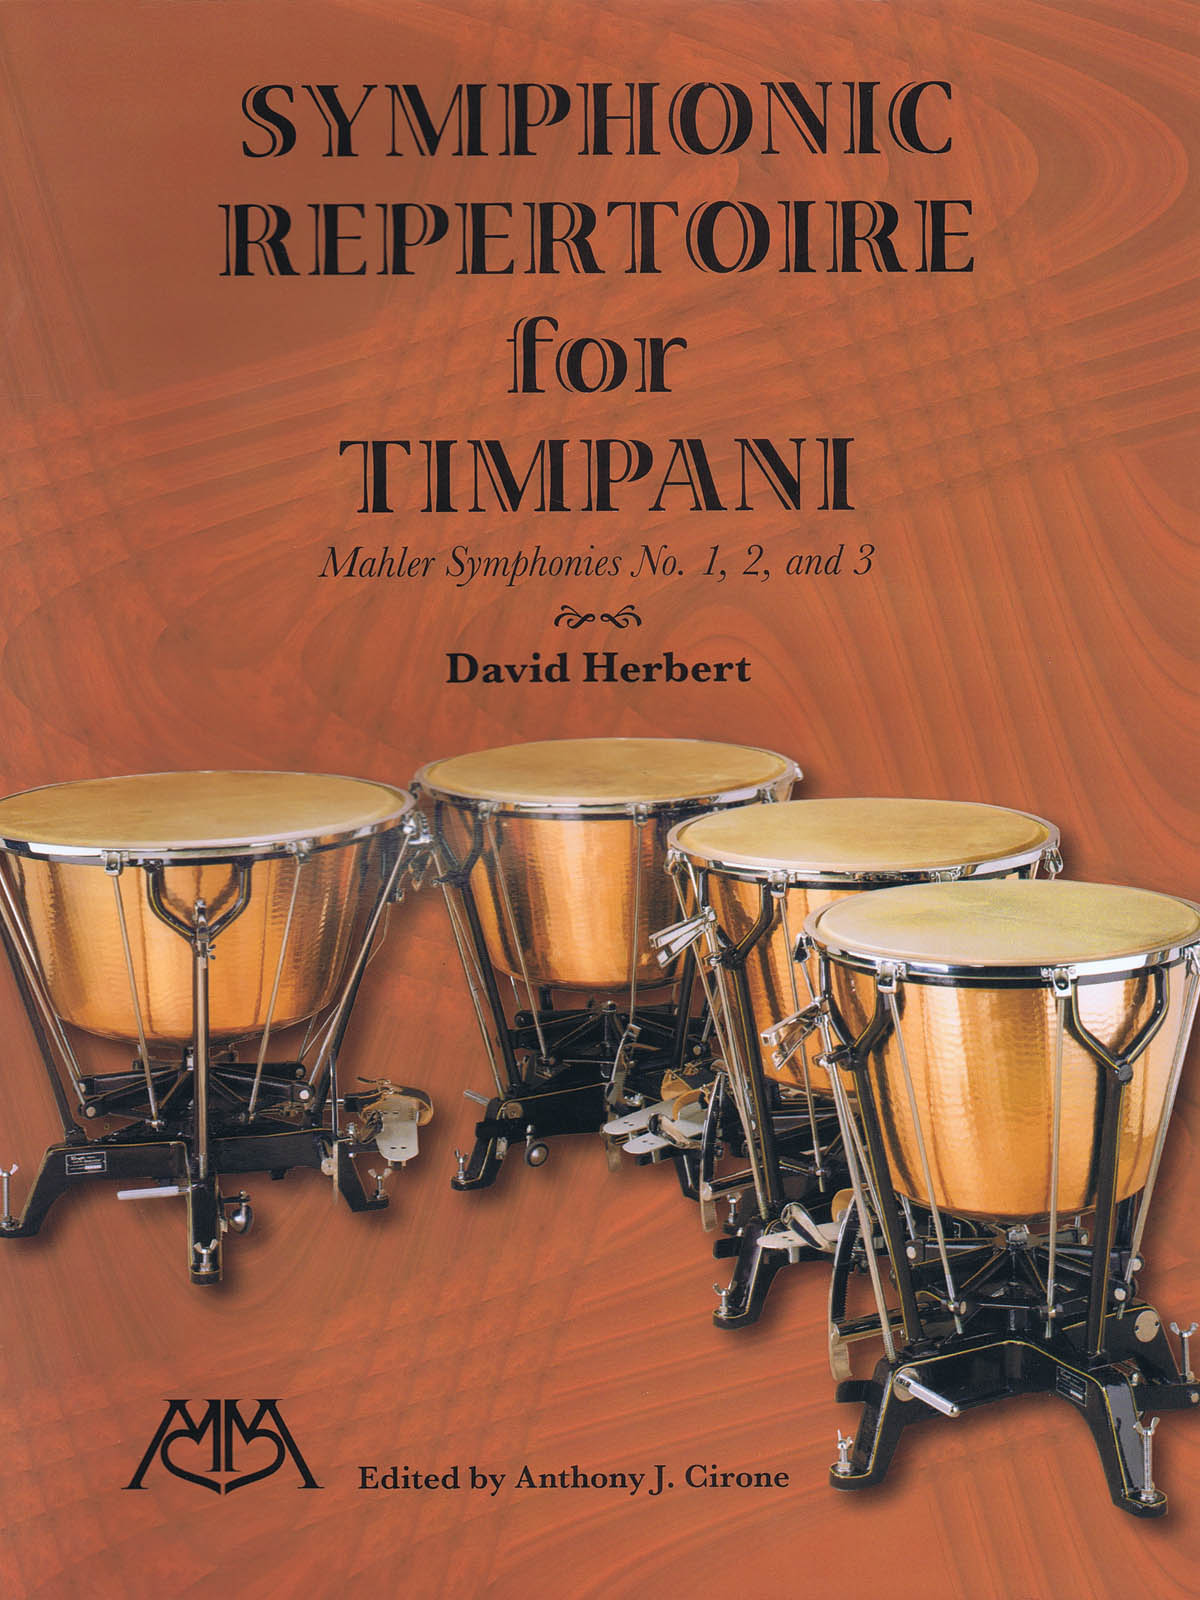 Symphonic Repertoire for Timpani - Mahler Symphonies 1-3 - noty pro timpány